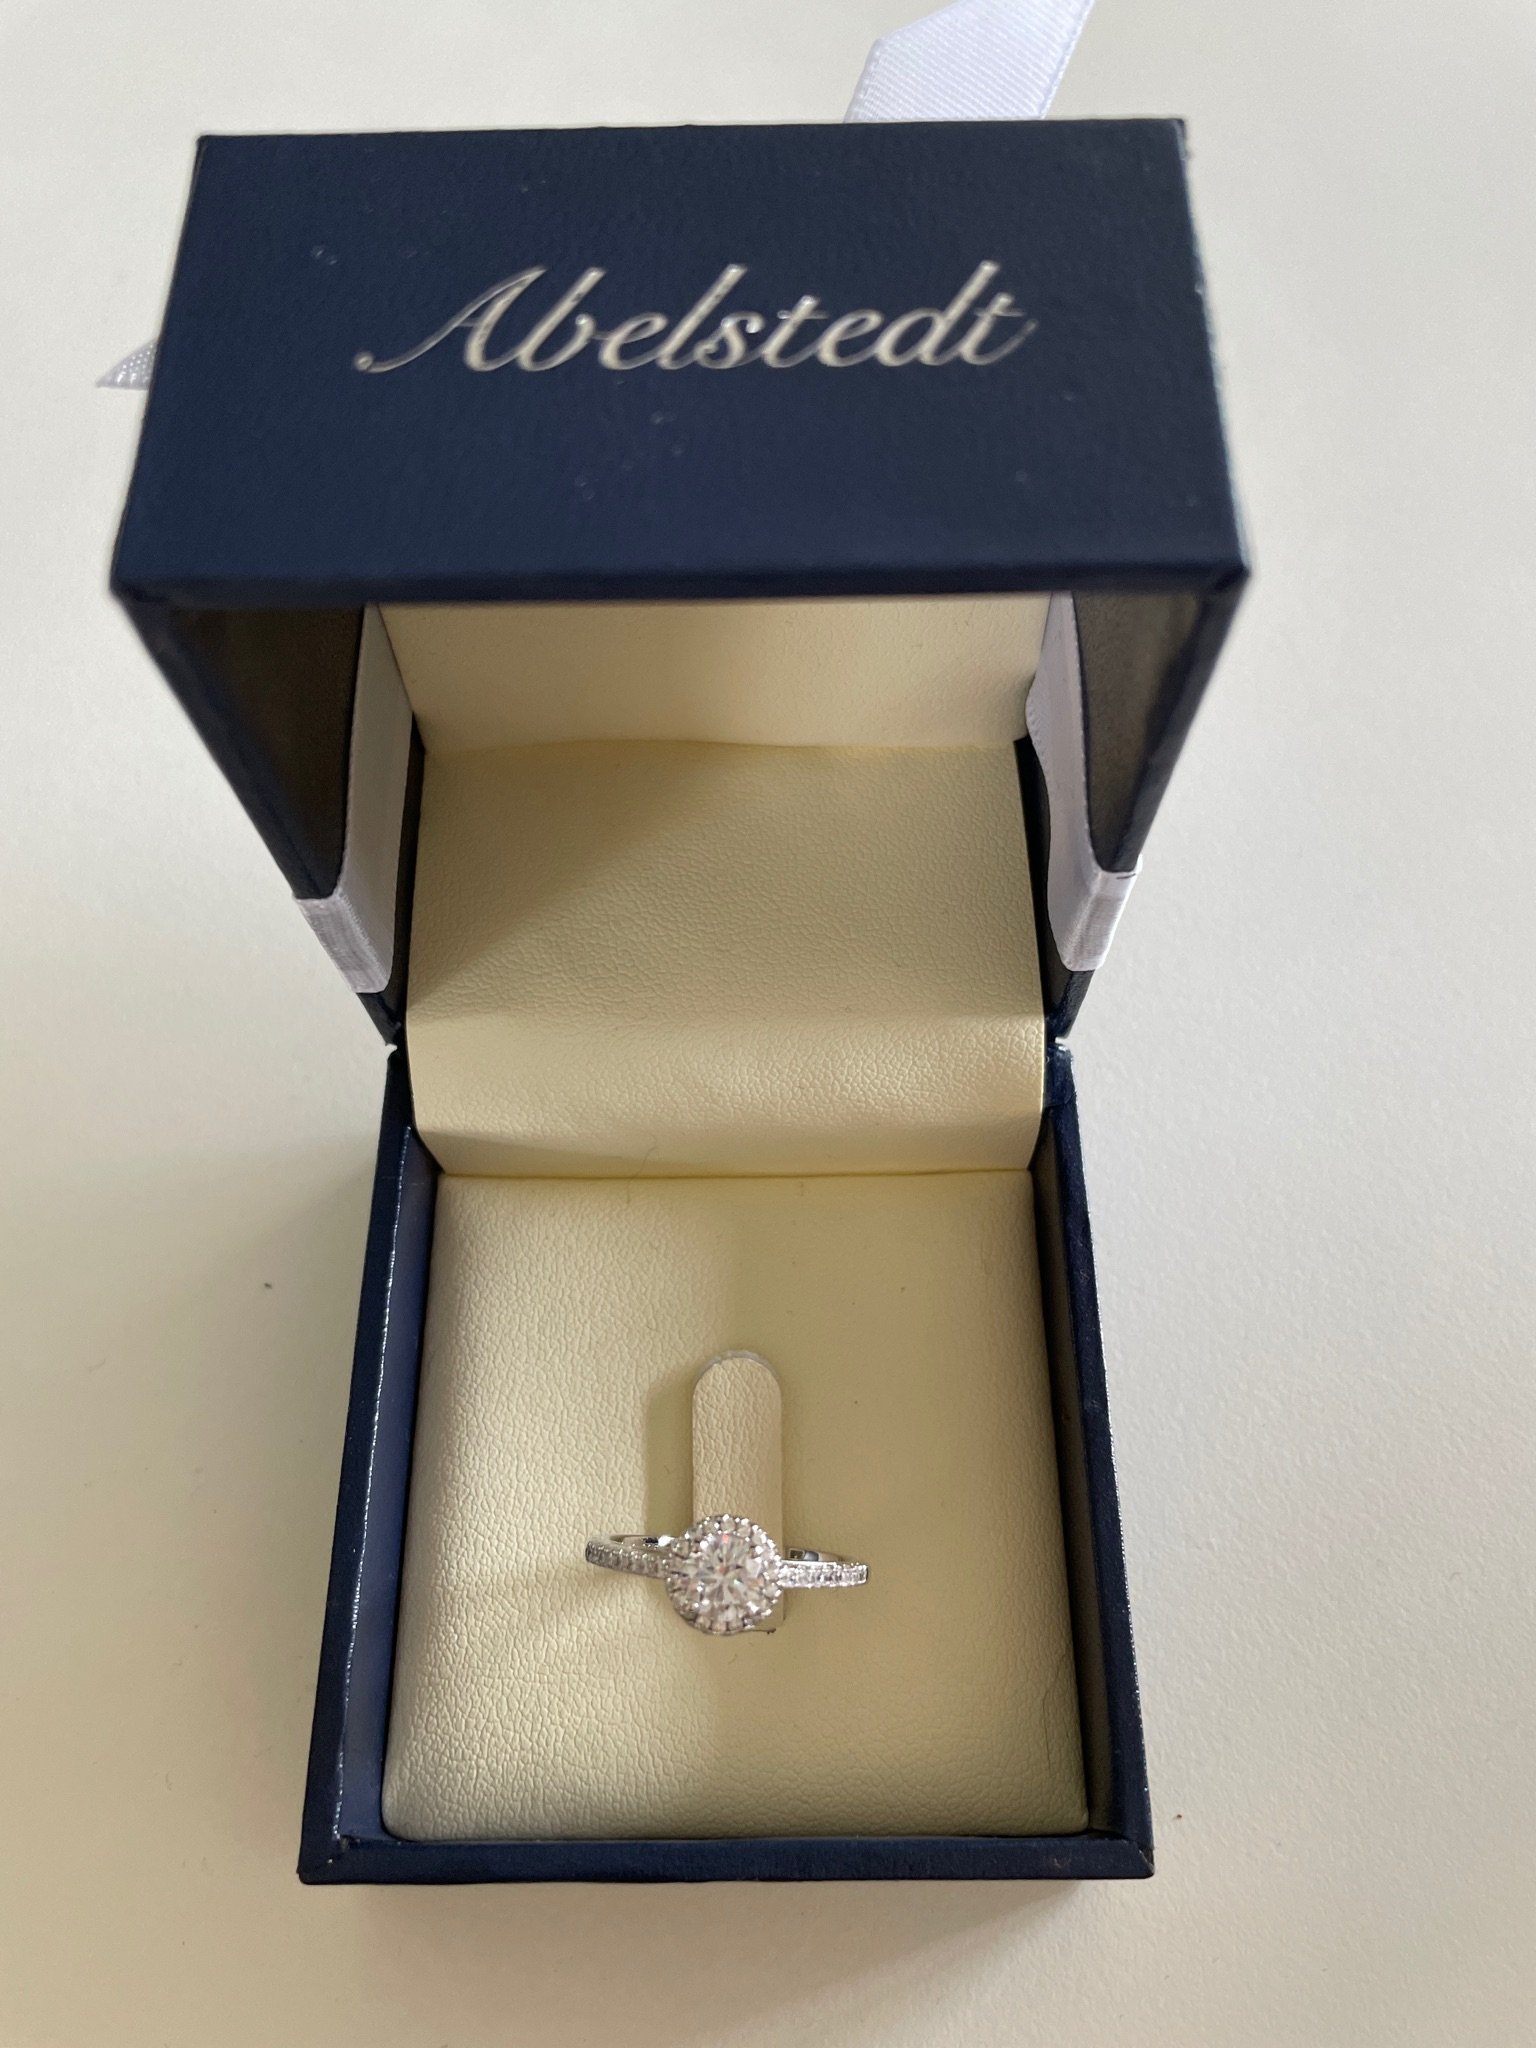 Abelstedt ring, 500 kr.